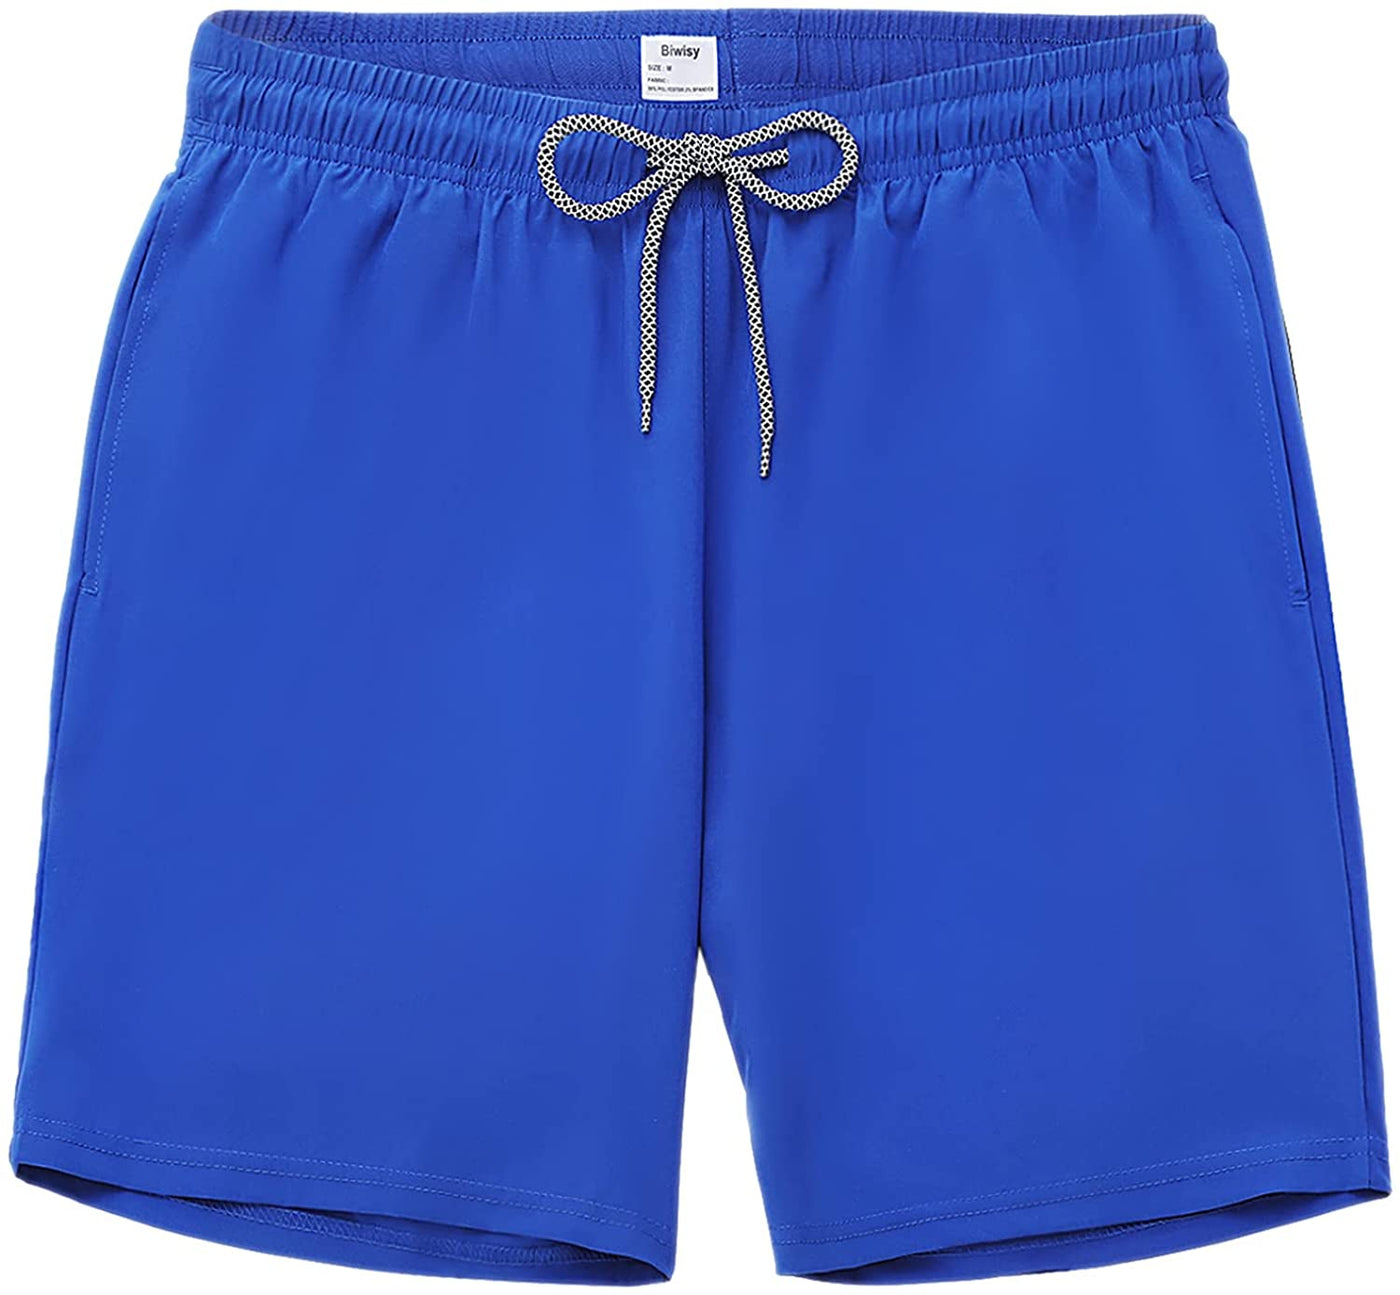 Men's swimming trunks quick dry beach shorts